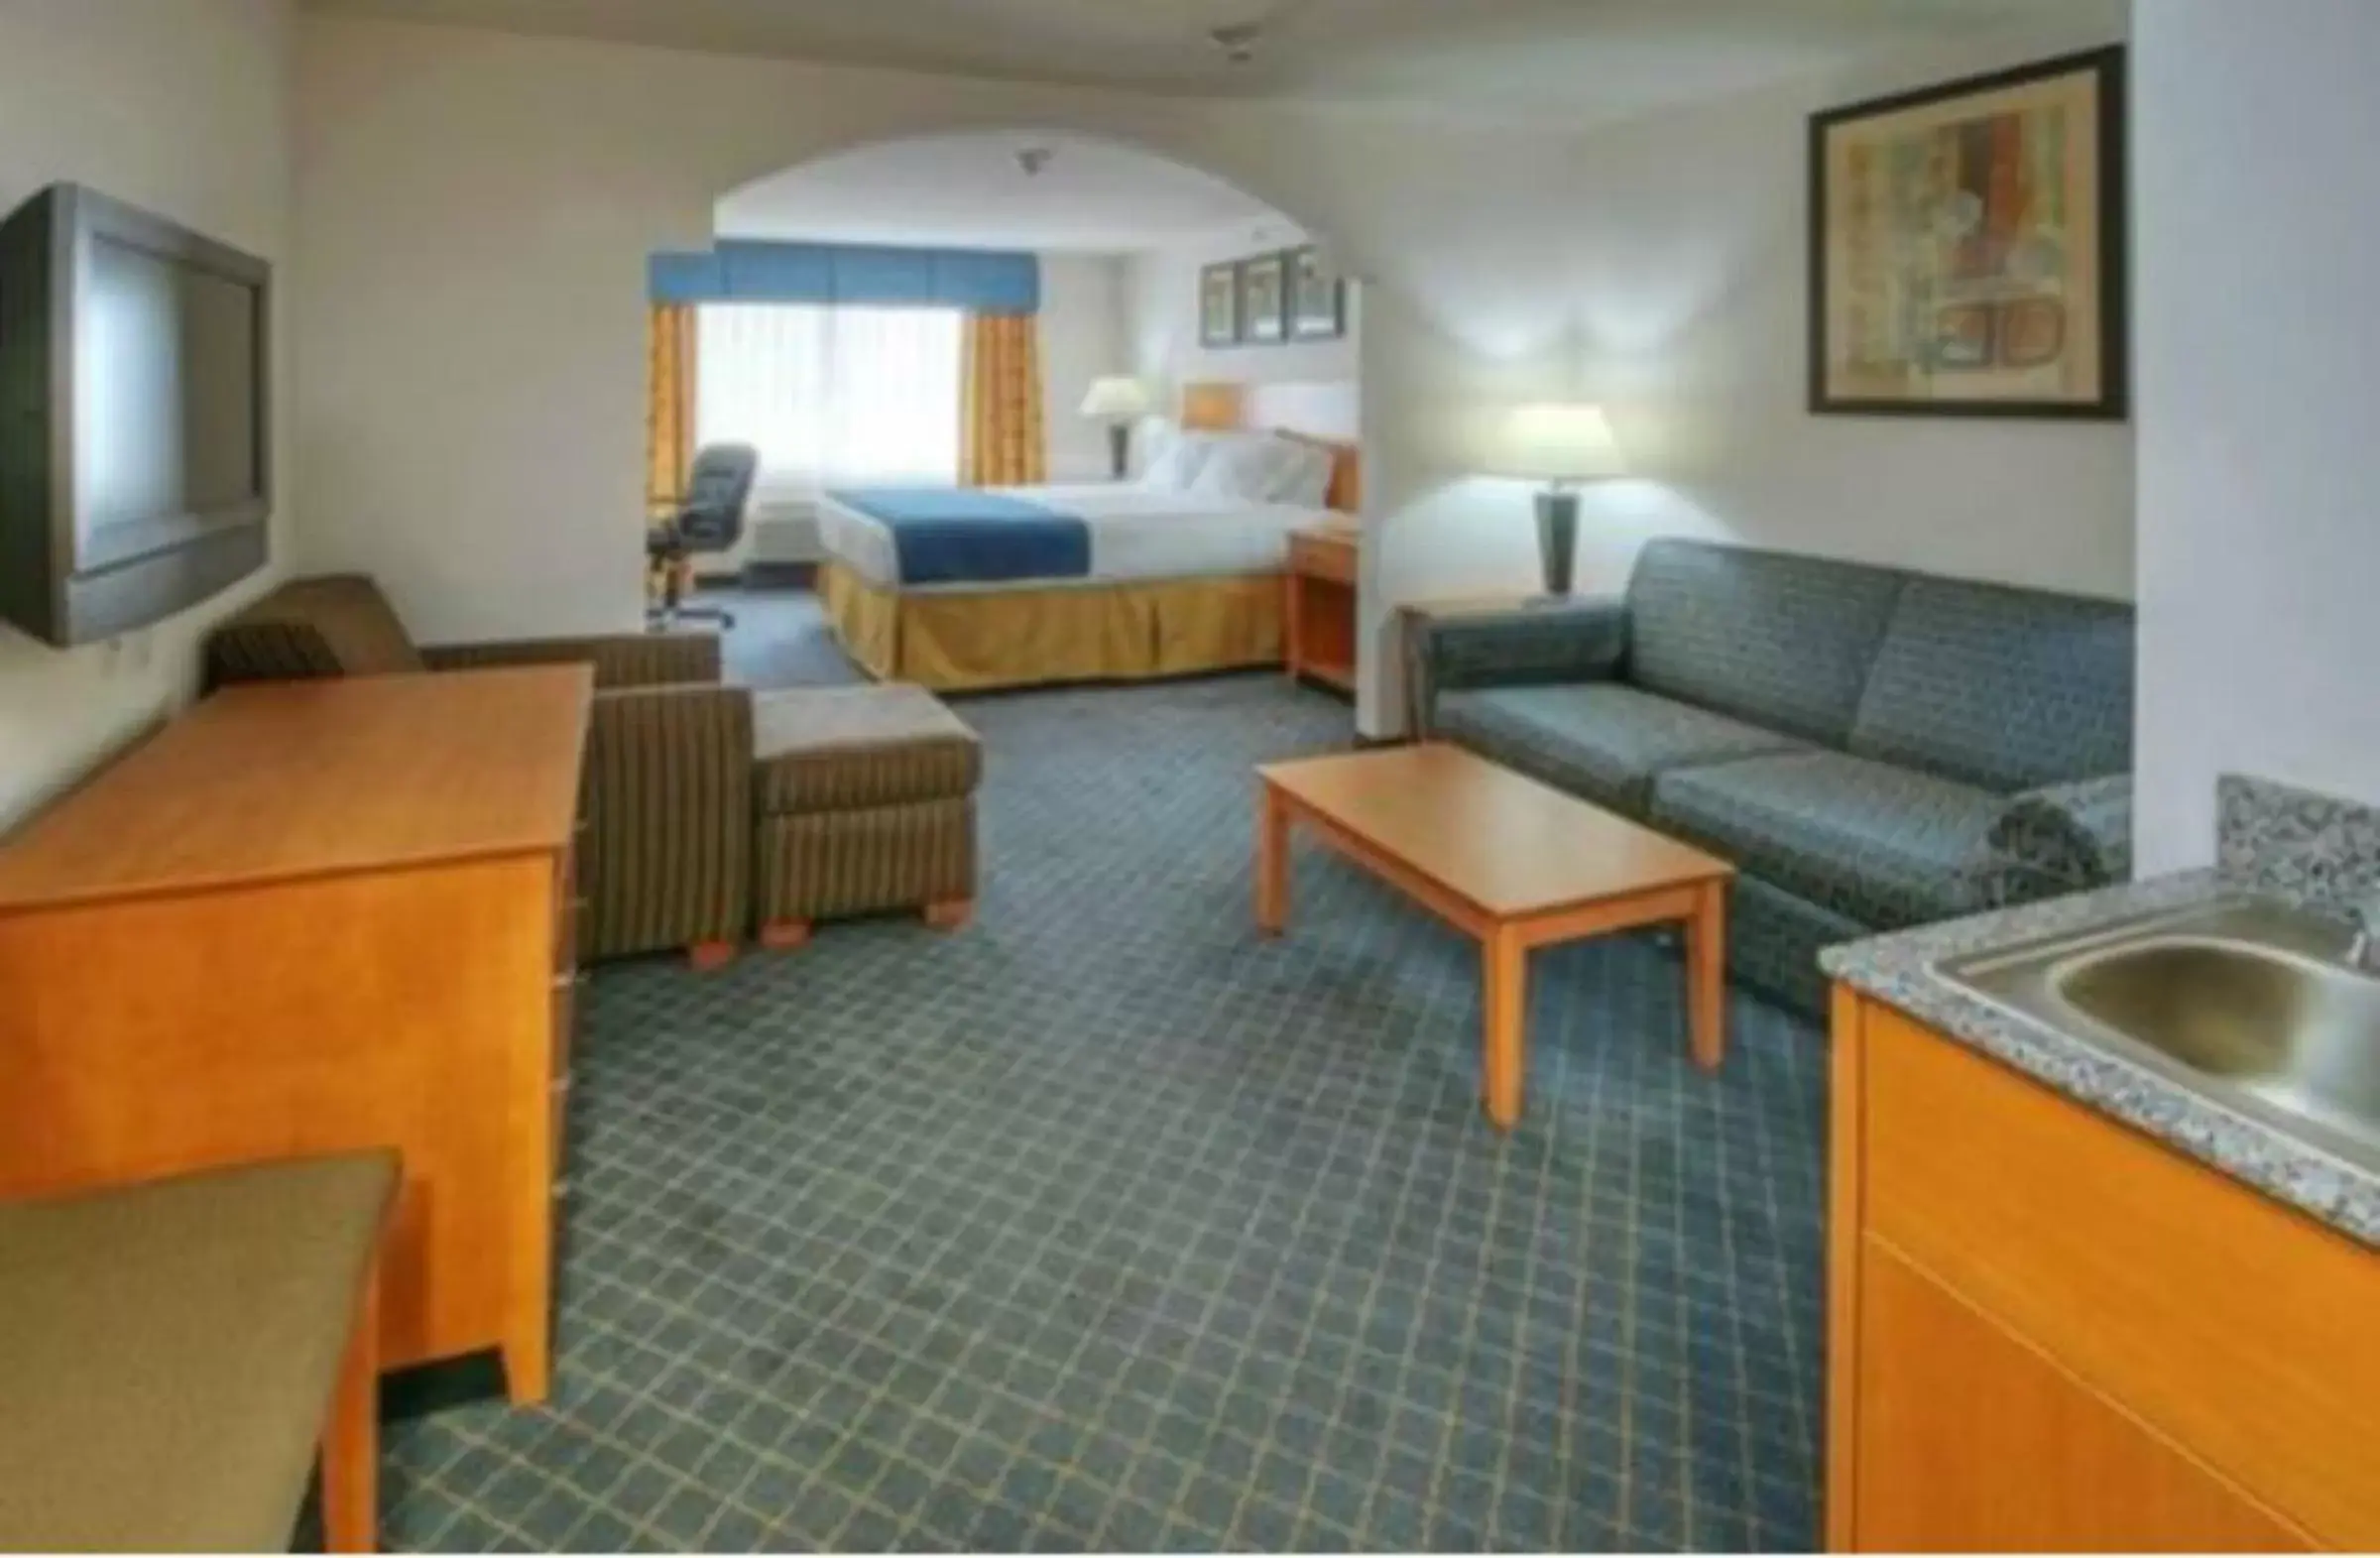 Holiday Inn Express Hotel & Suites Carlsbad, an IHG Hotel